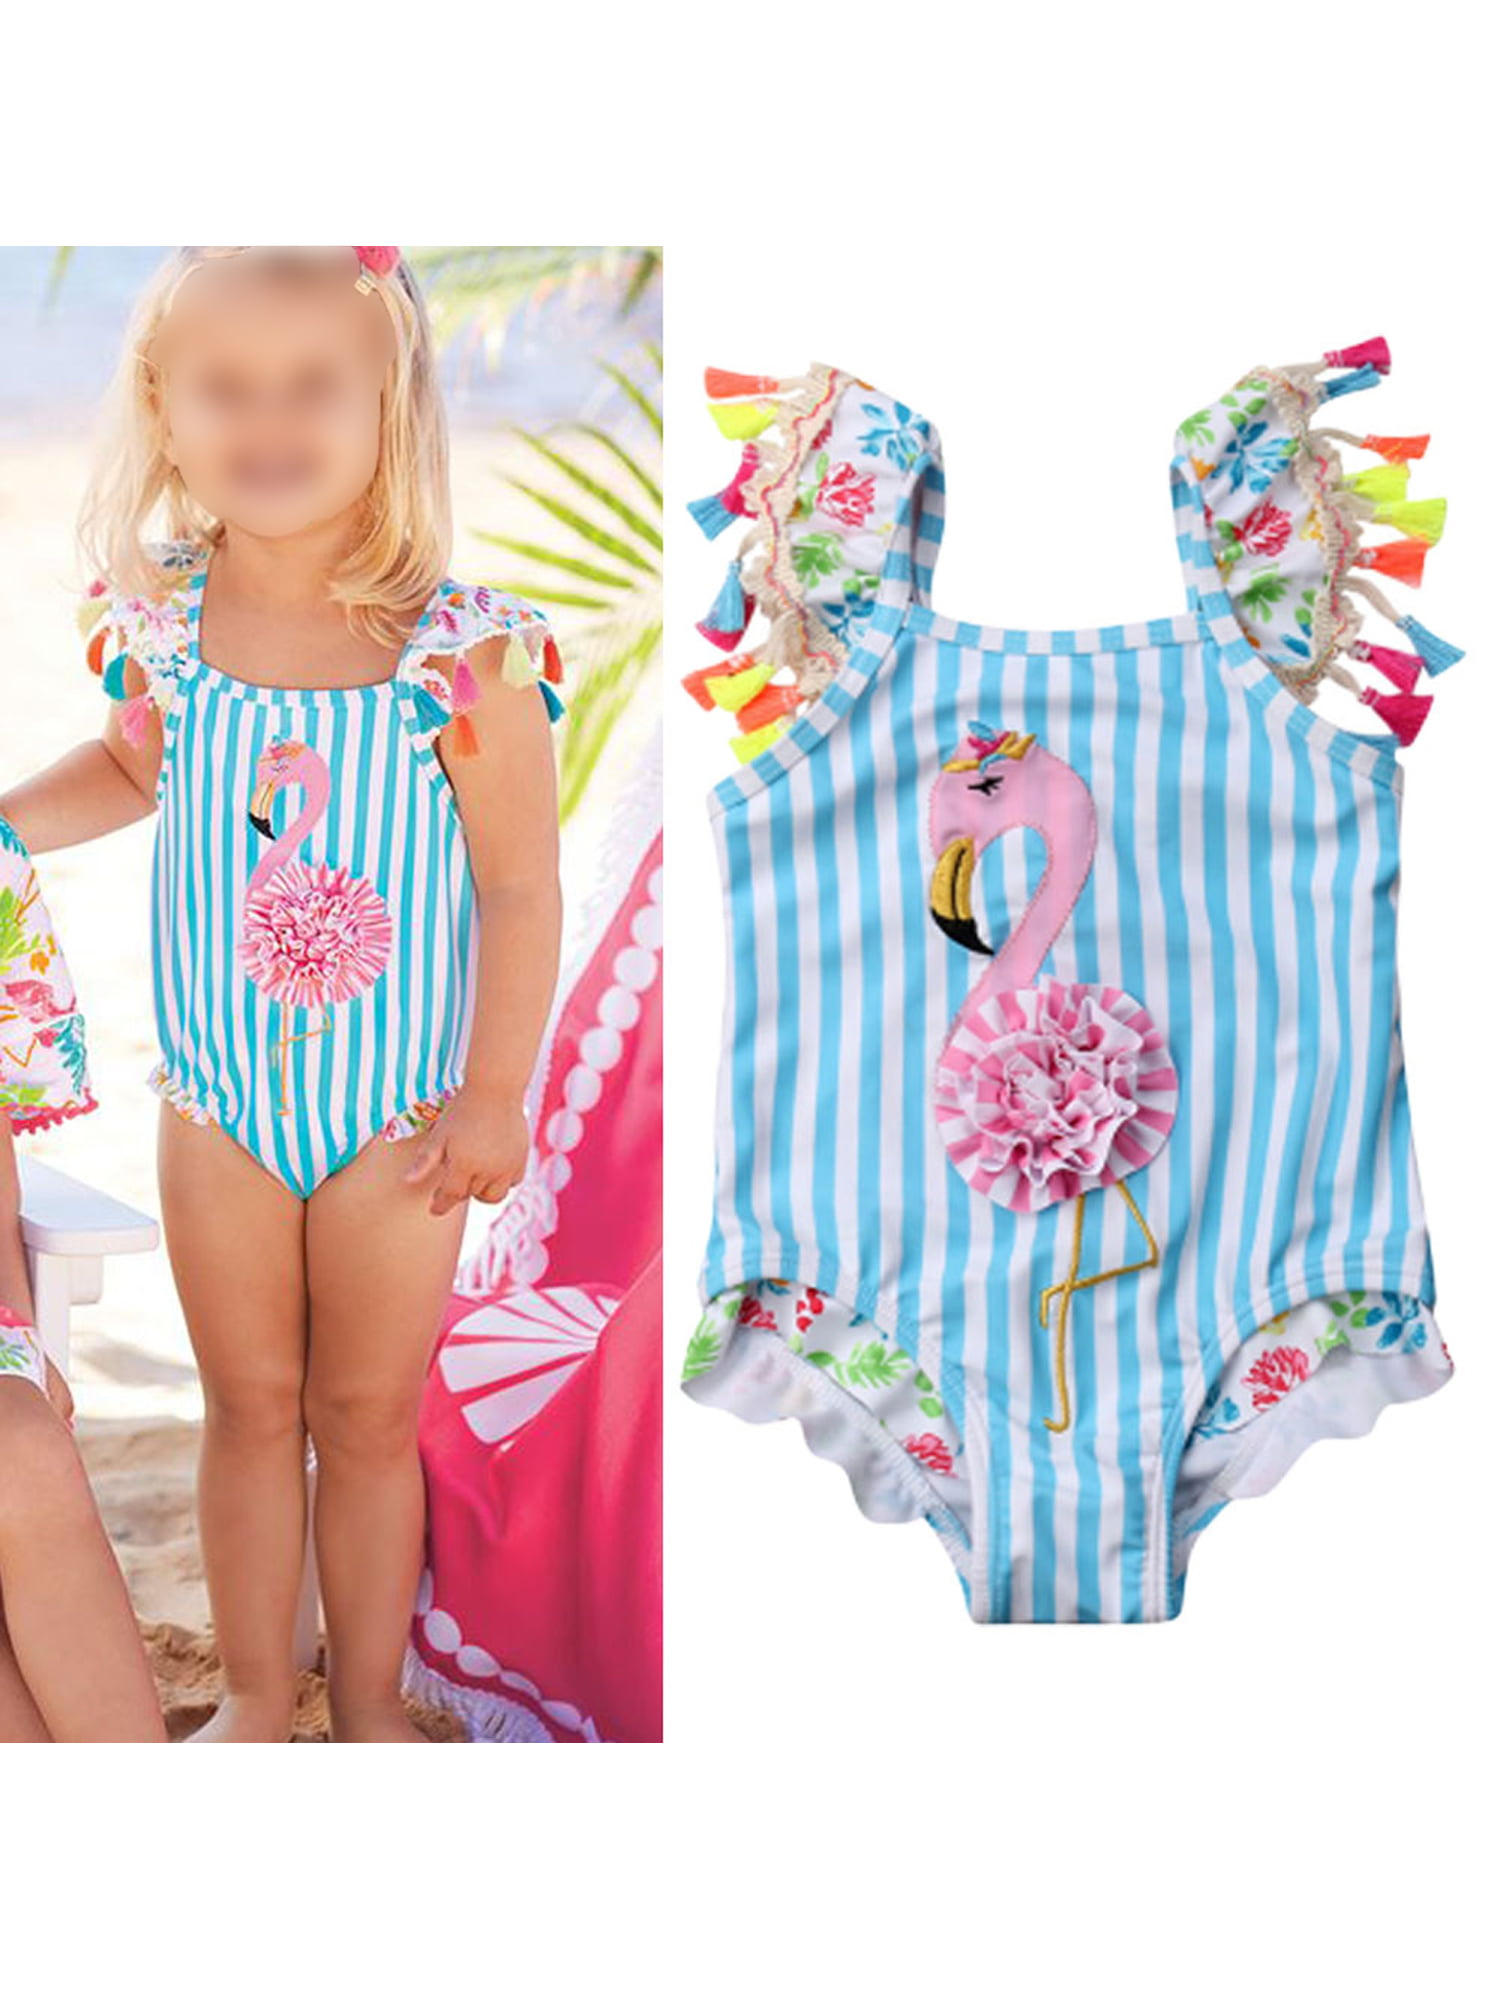 Newborn Infant Baby Girls Cute Unicorn Swimsuit Rainbow Bathing Suit Sleeveless Floral Bikini Swimsuit One Piece Clothes